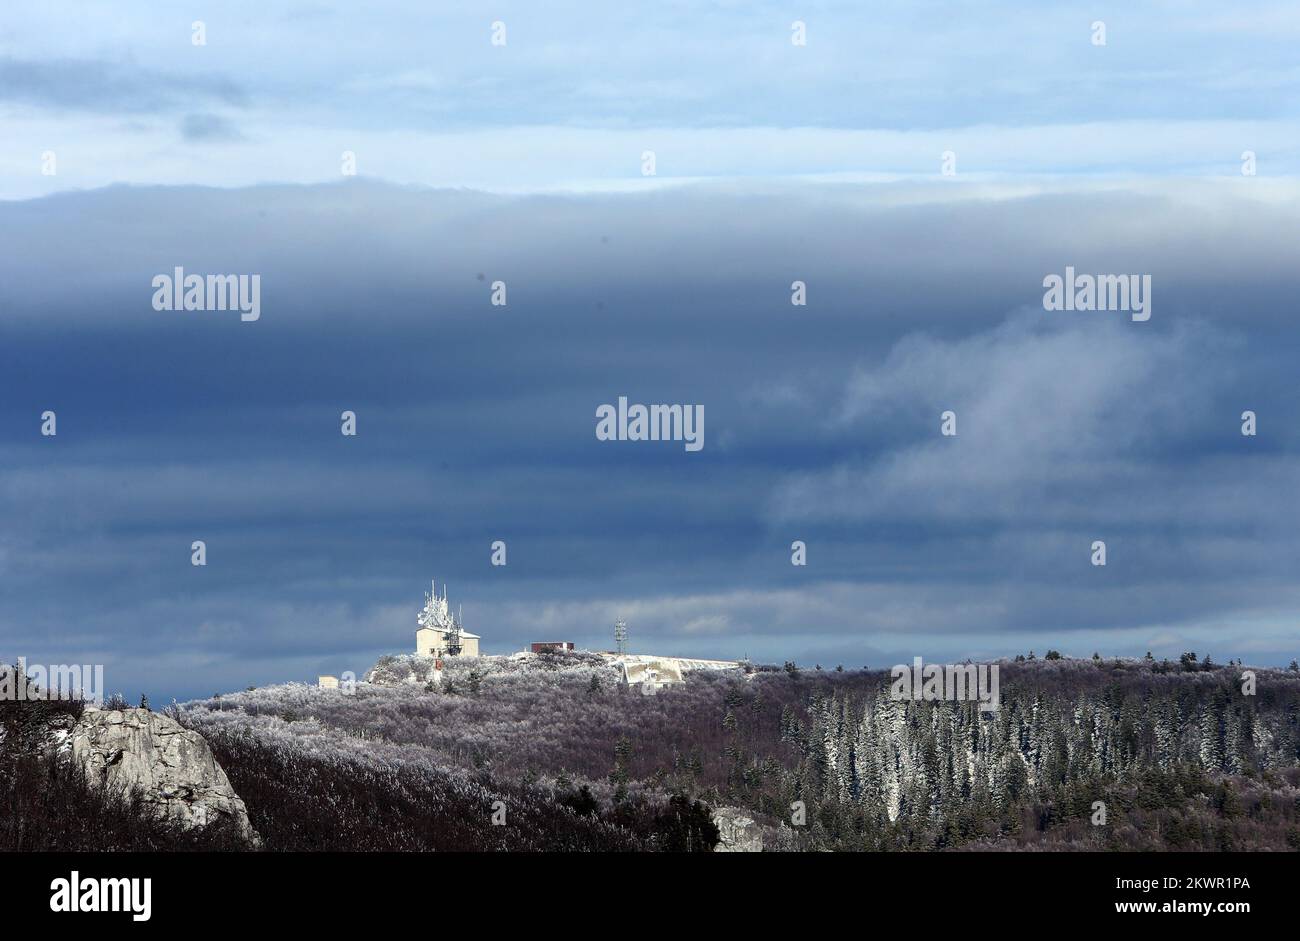 Berghütte Zavizan im Nationalpark Nördlicher Velebit in Kroatien, Europa  Stockfotografie - Alamy